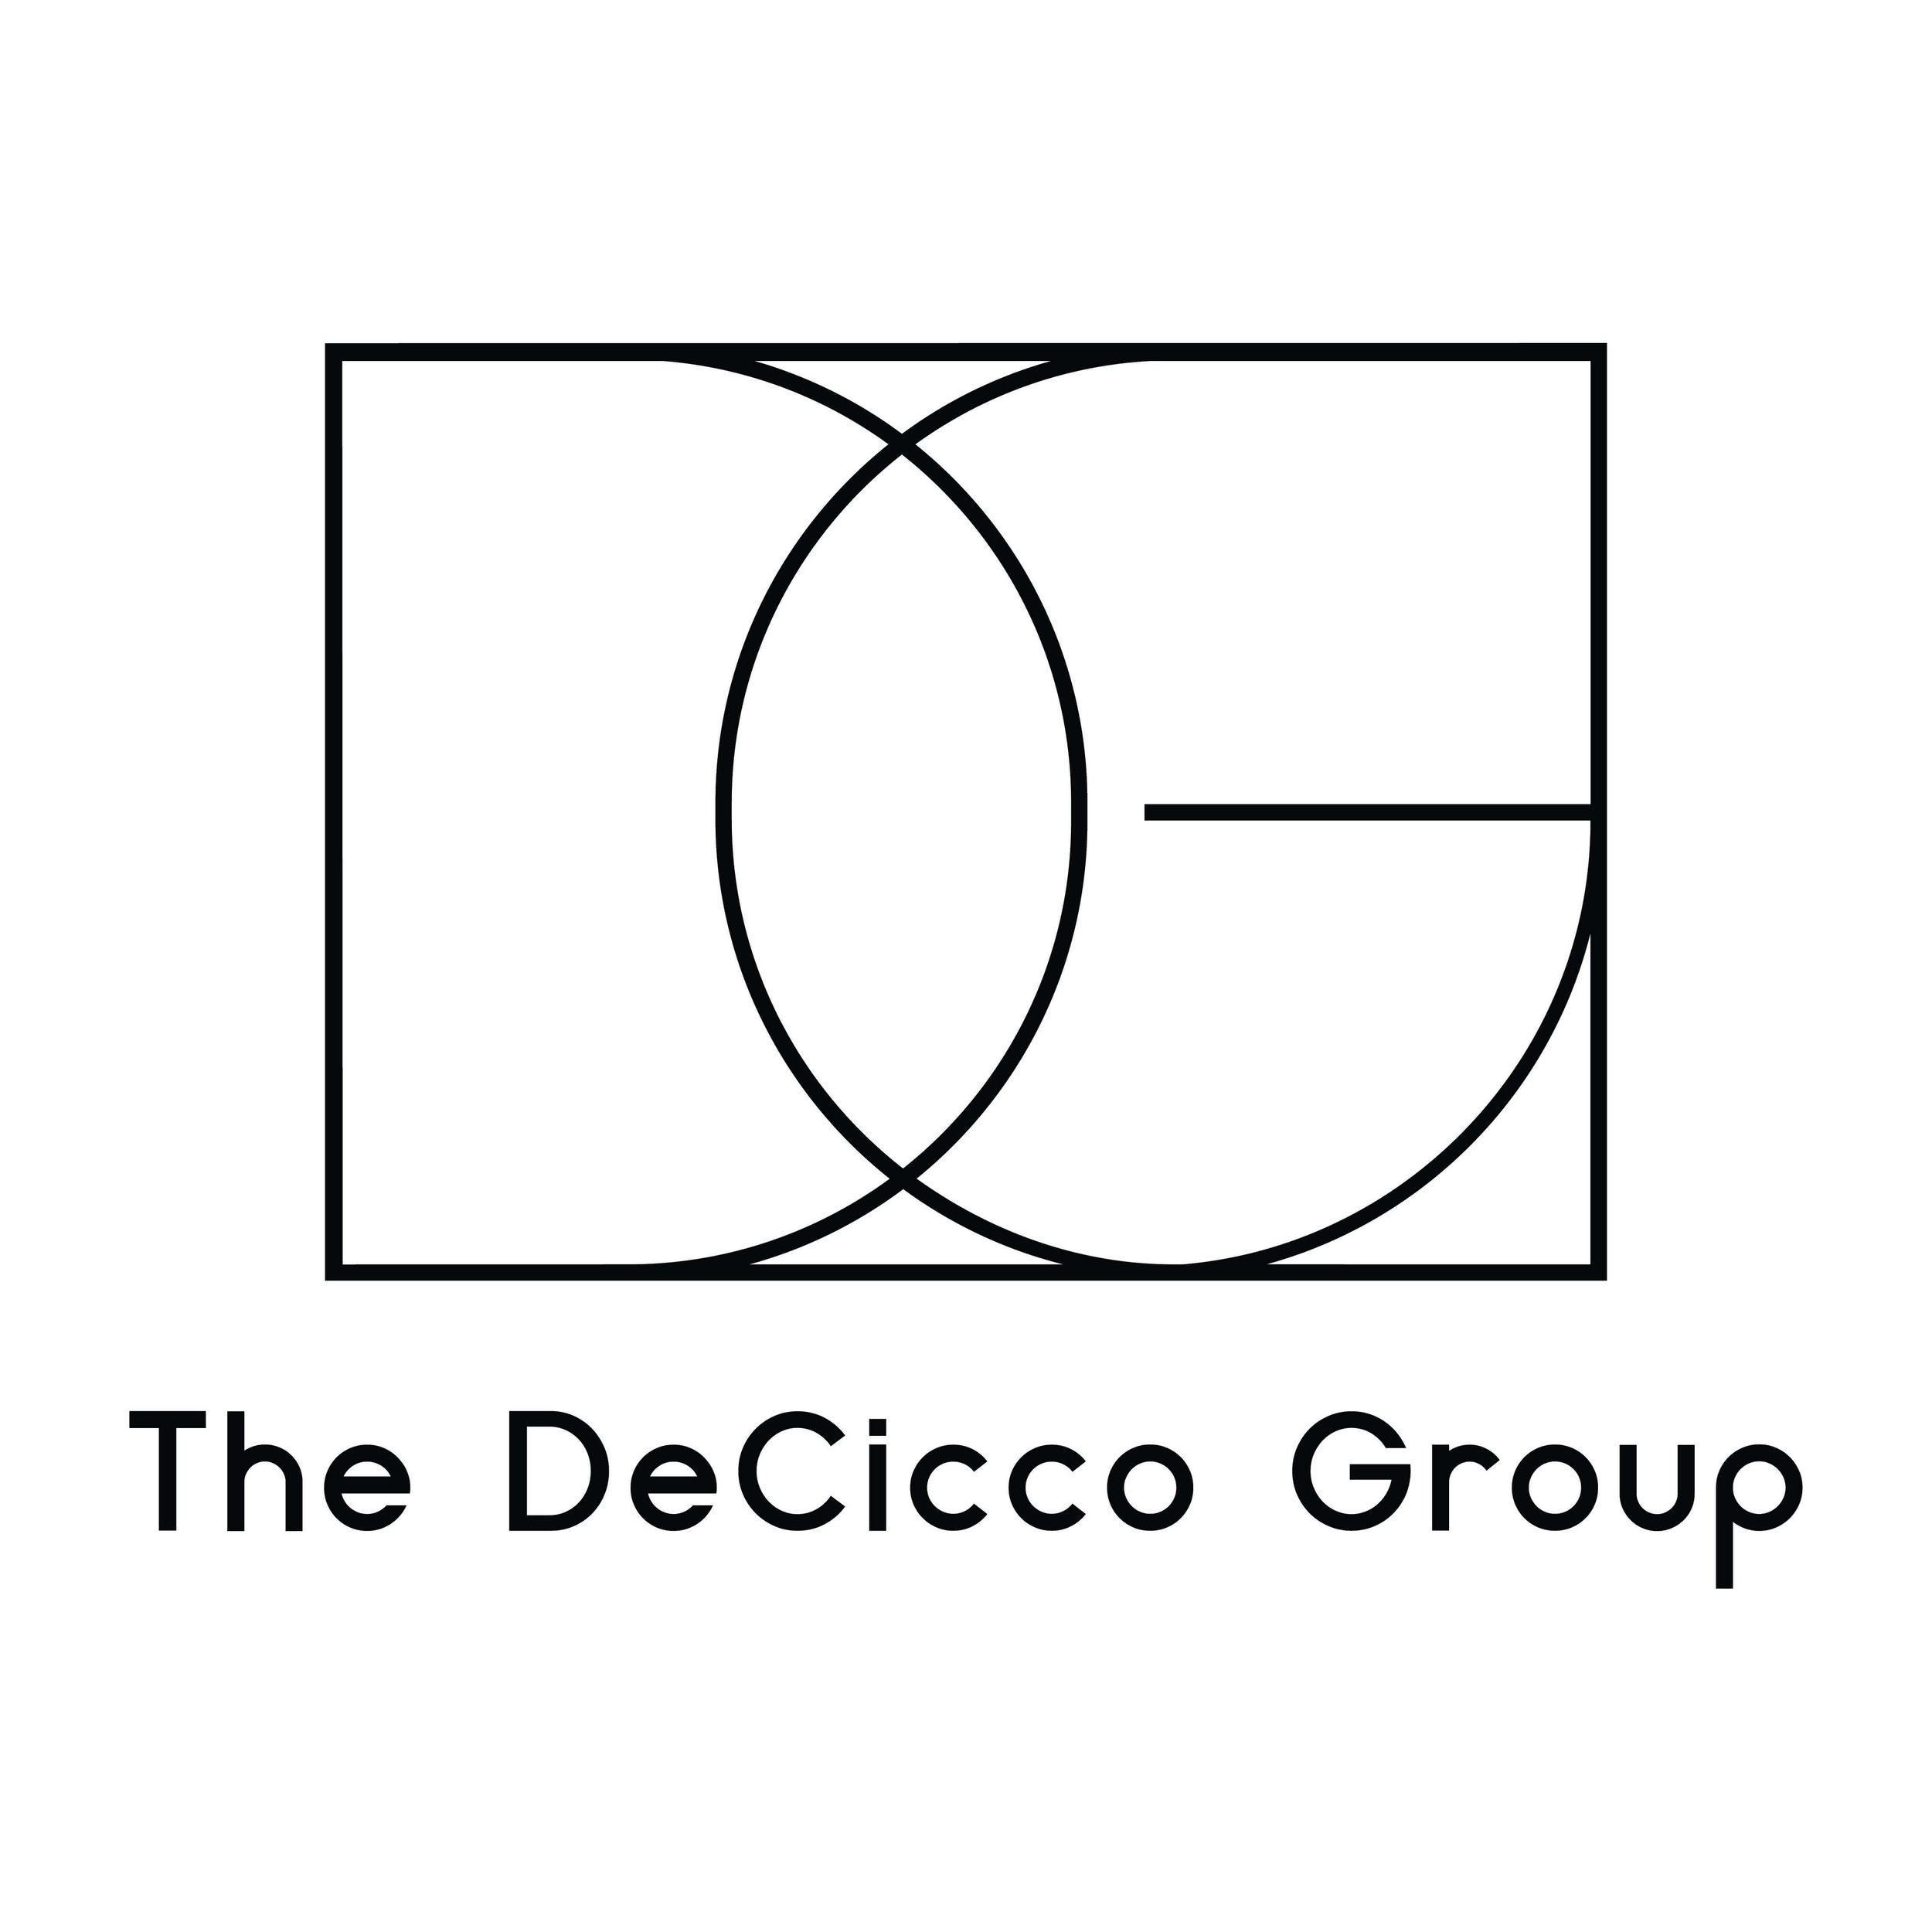 The DeCicco Group